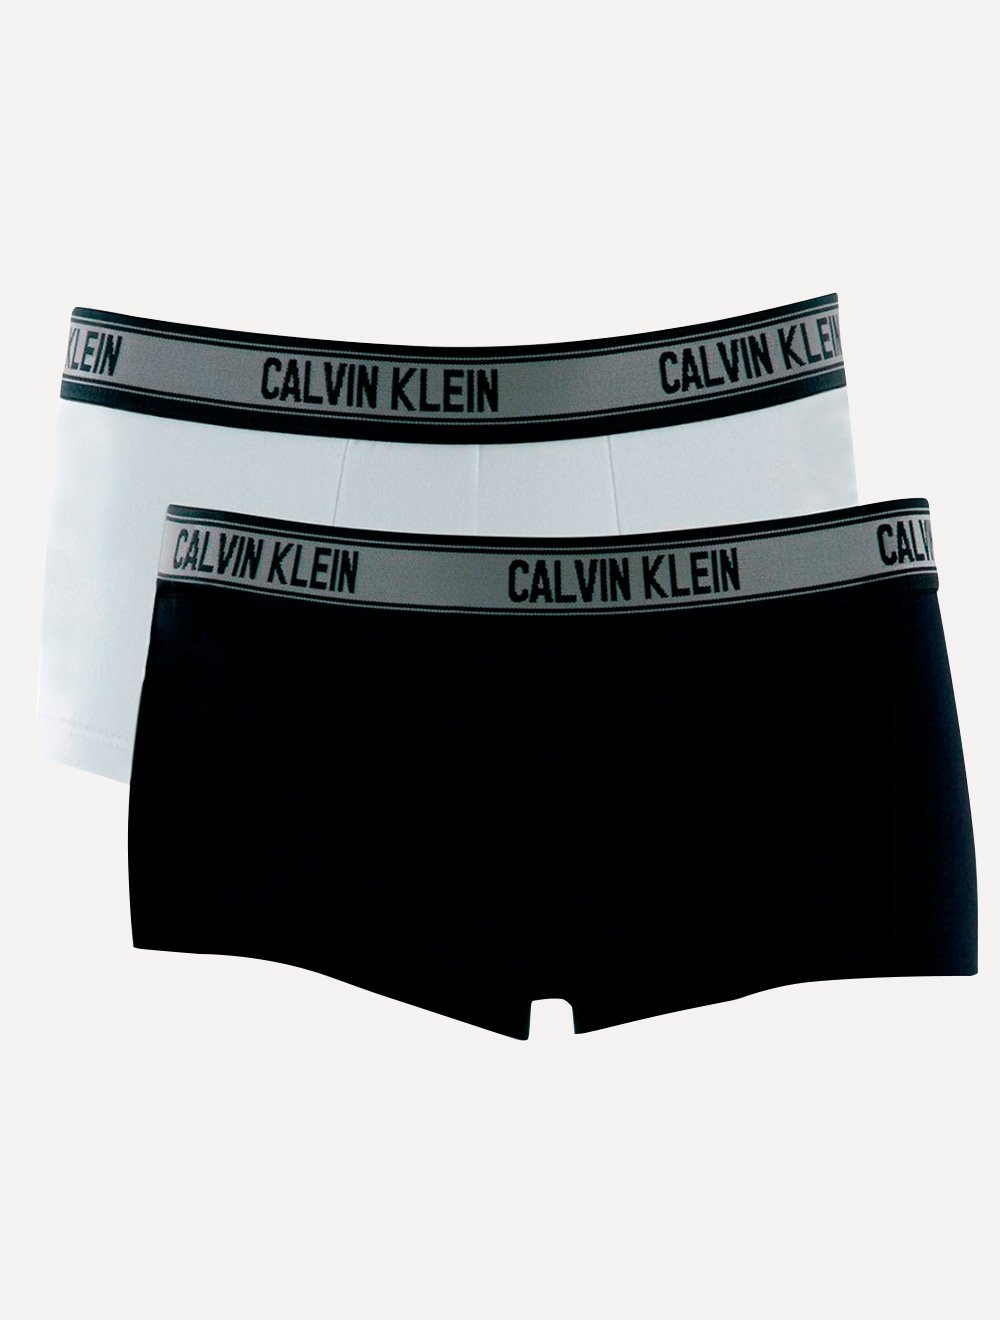 Cueca Calvin Klein Low Rise C11.09 BR00 Grey Branca e Preta Pack 2UN